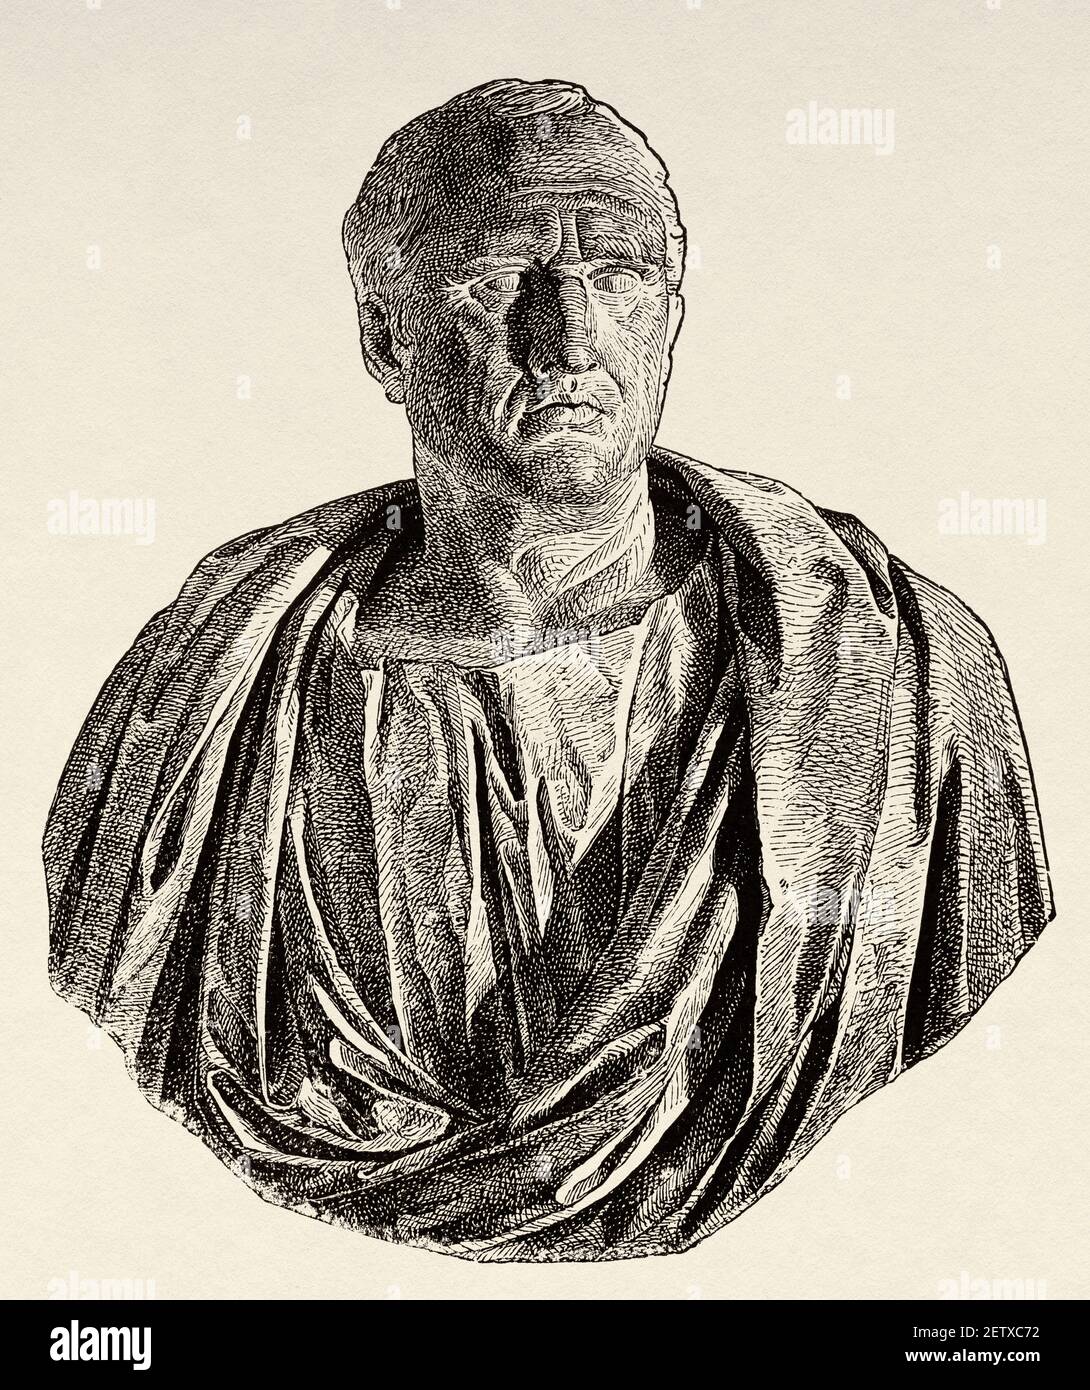 Marcus Tullius Cicero (106-43 BC) Roman statesman, lawyer, scholar and Academic Skeptic, Ancient roman empire. Italy, Europe. Old 19th century engraved illustration, El Mundo Ilustrado 1881 Stock Photo